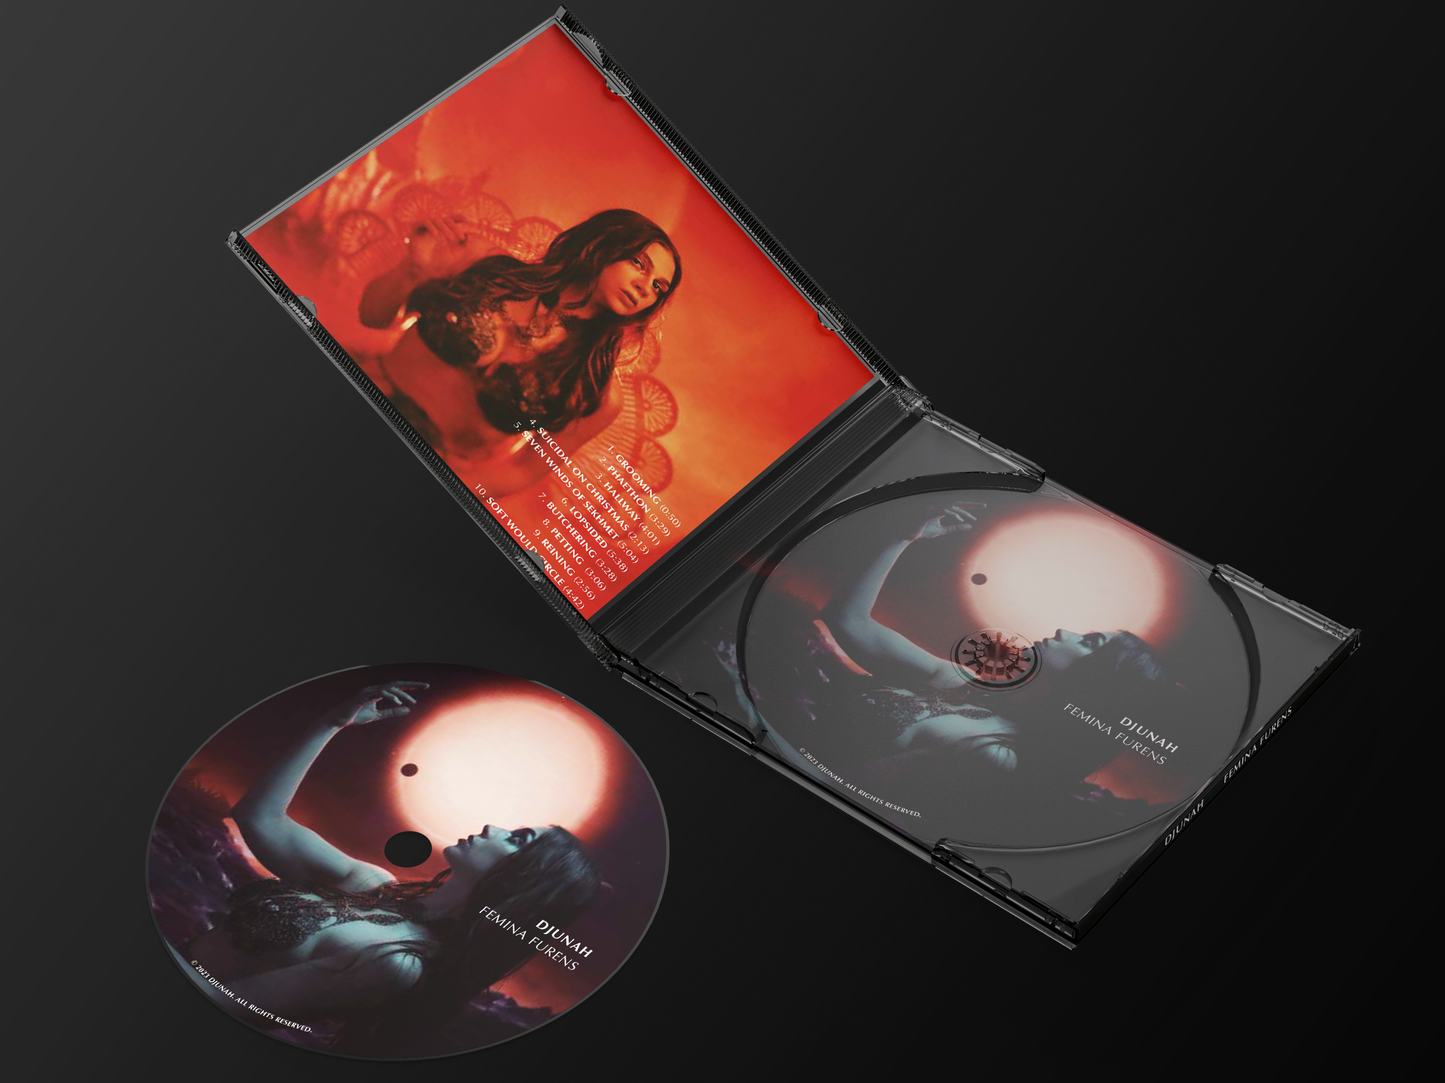 Djunah "Femina Furens" compact disc CD in jewel case, inside spread